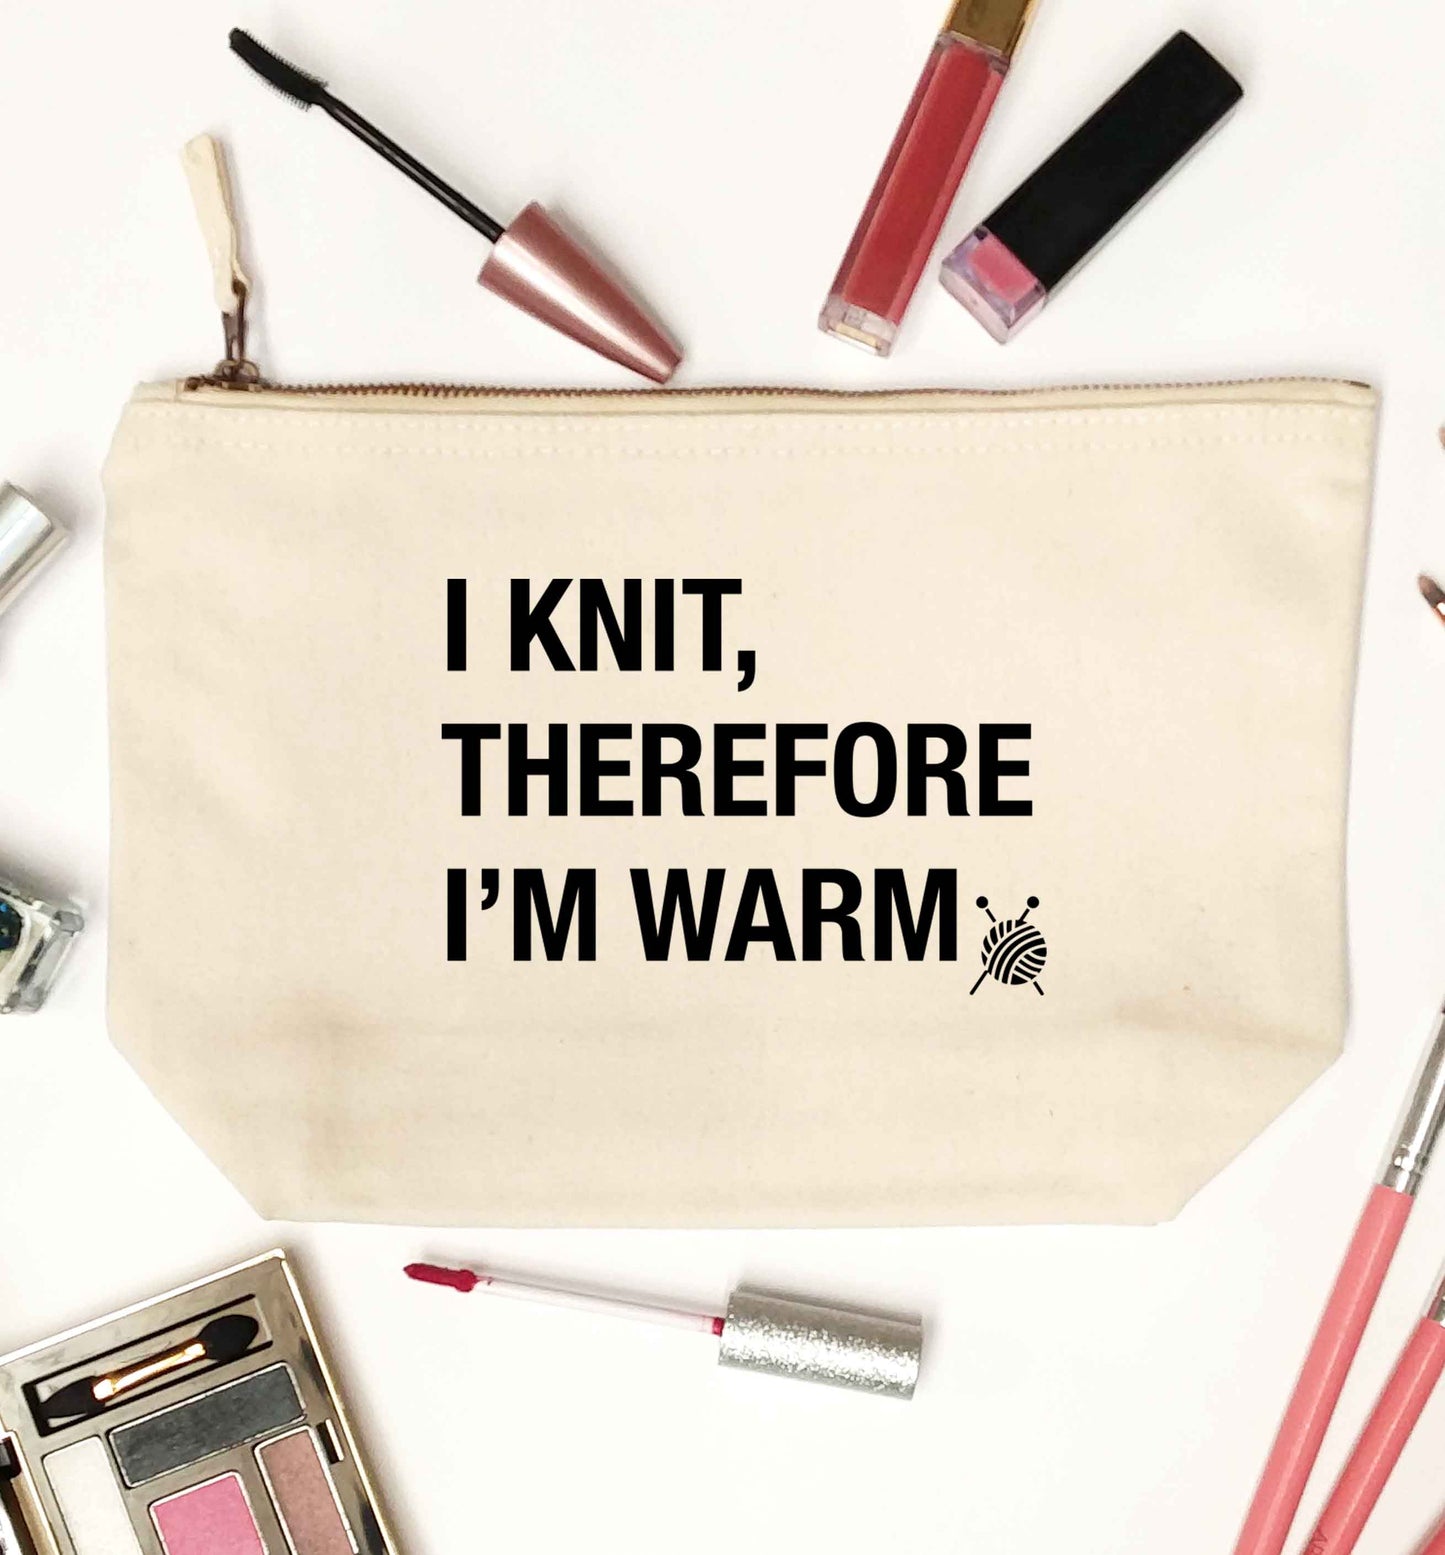 I knit therefore I'm warm natural makeup bag